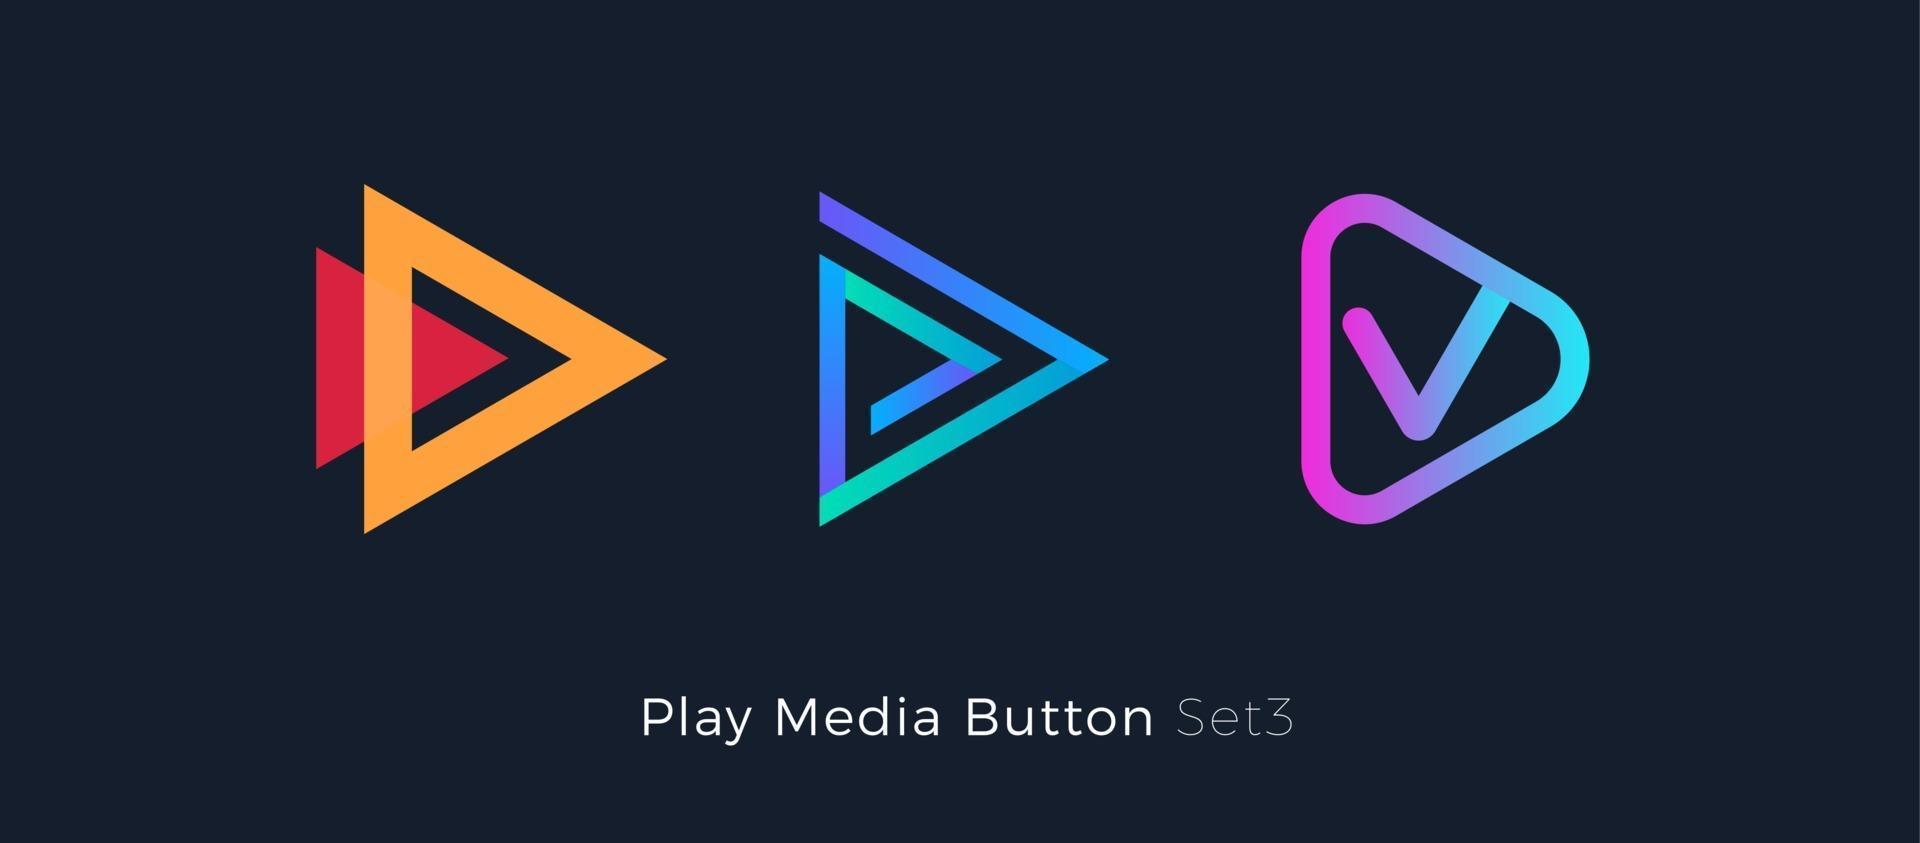 Play button foe media app vector